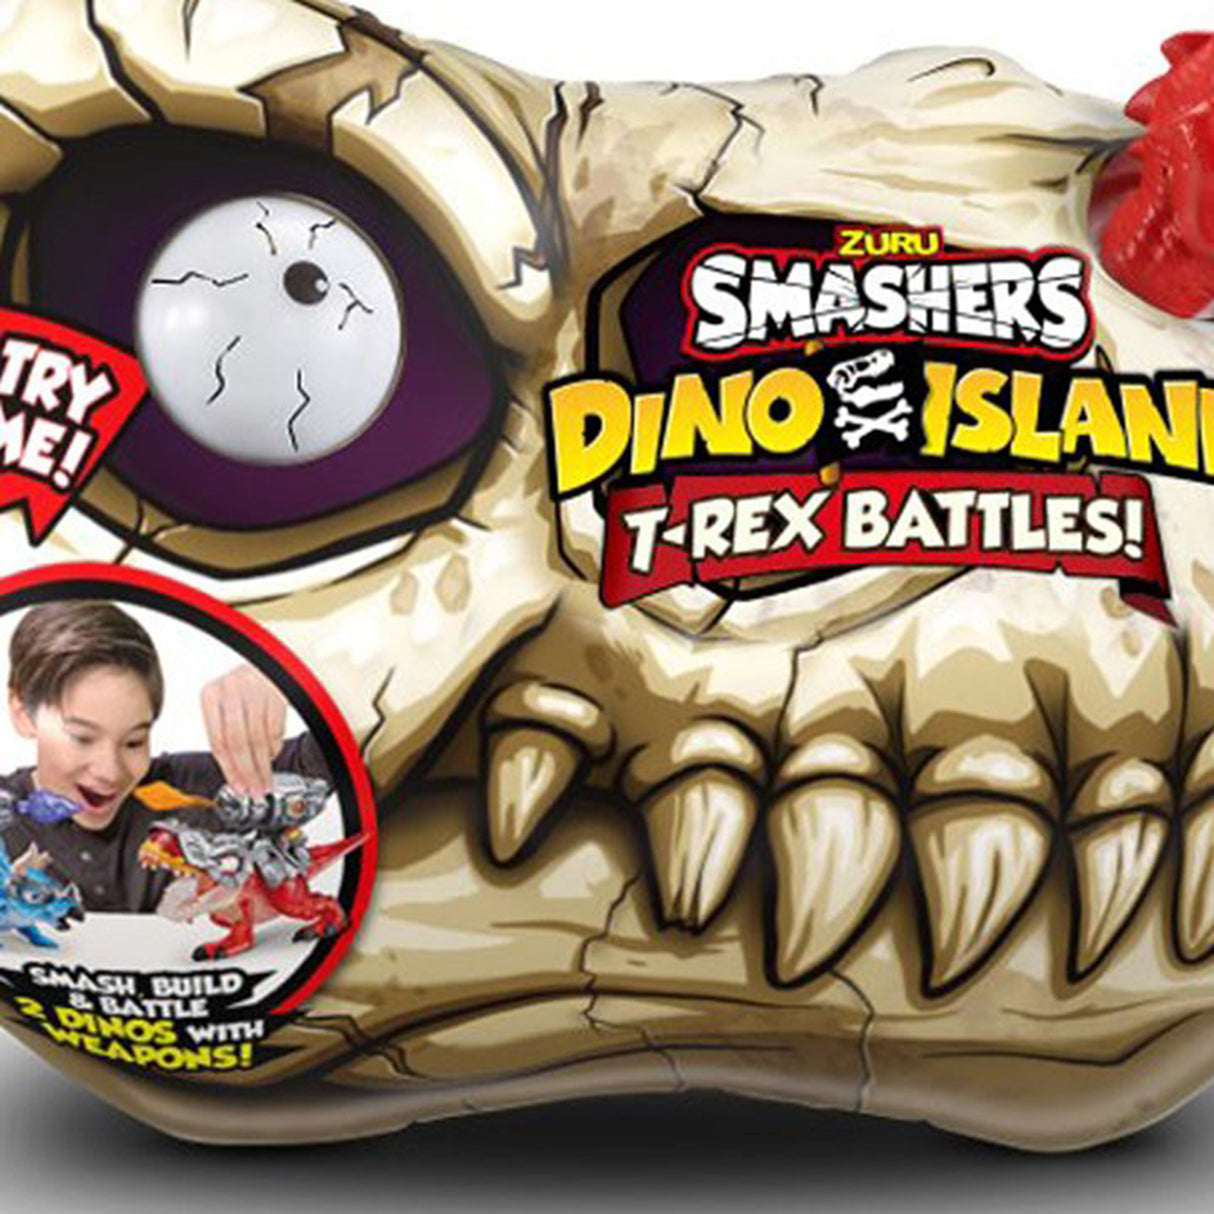 Smashers Dino Island T-Rex Battle Playset